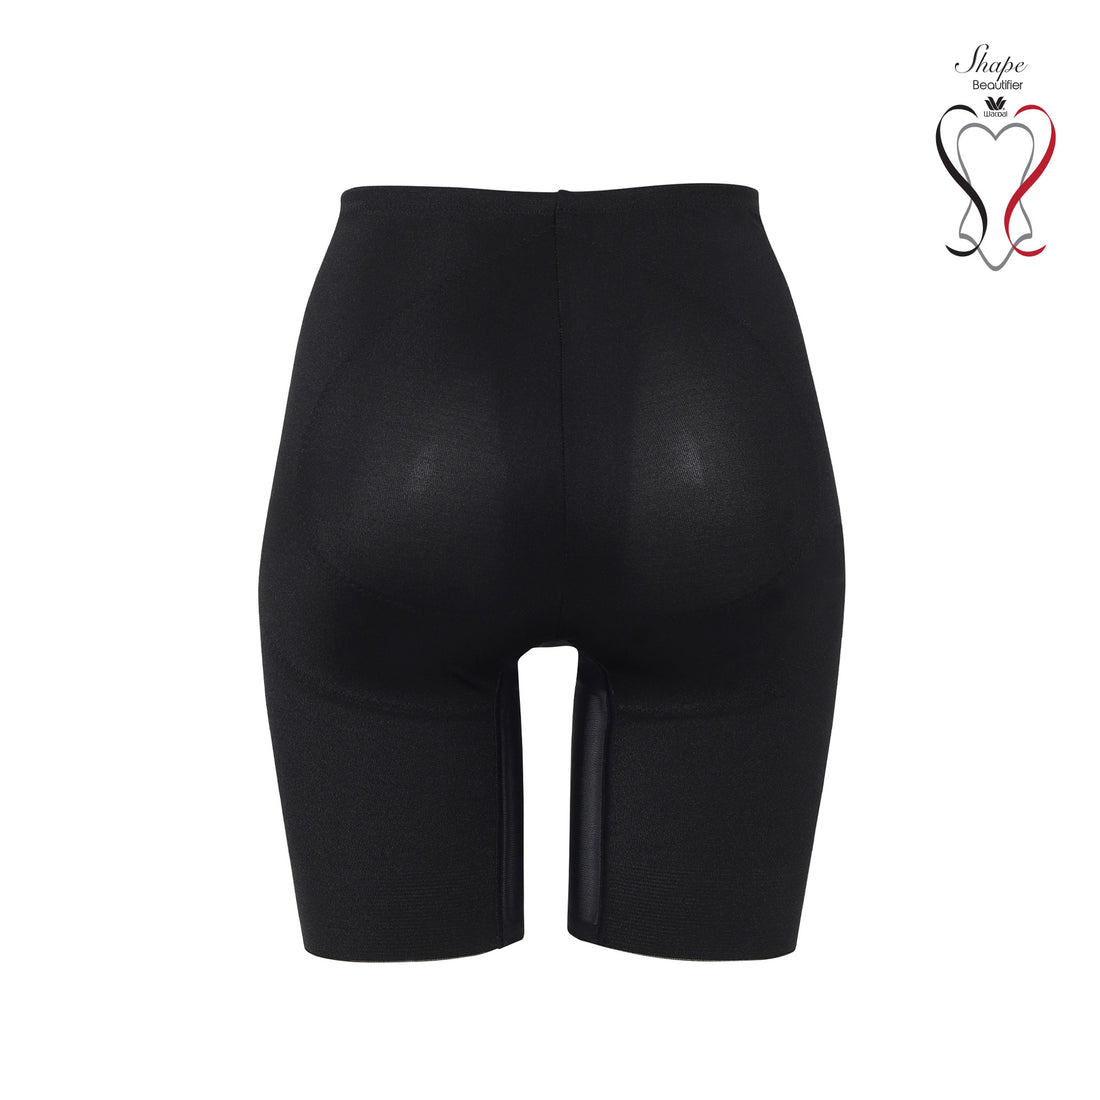 Wacoal Shapewear STAY shapewear pants for abdomen, hips and thighs model WG4129 black (BL)